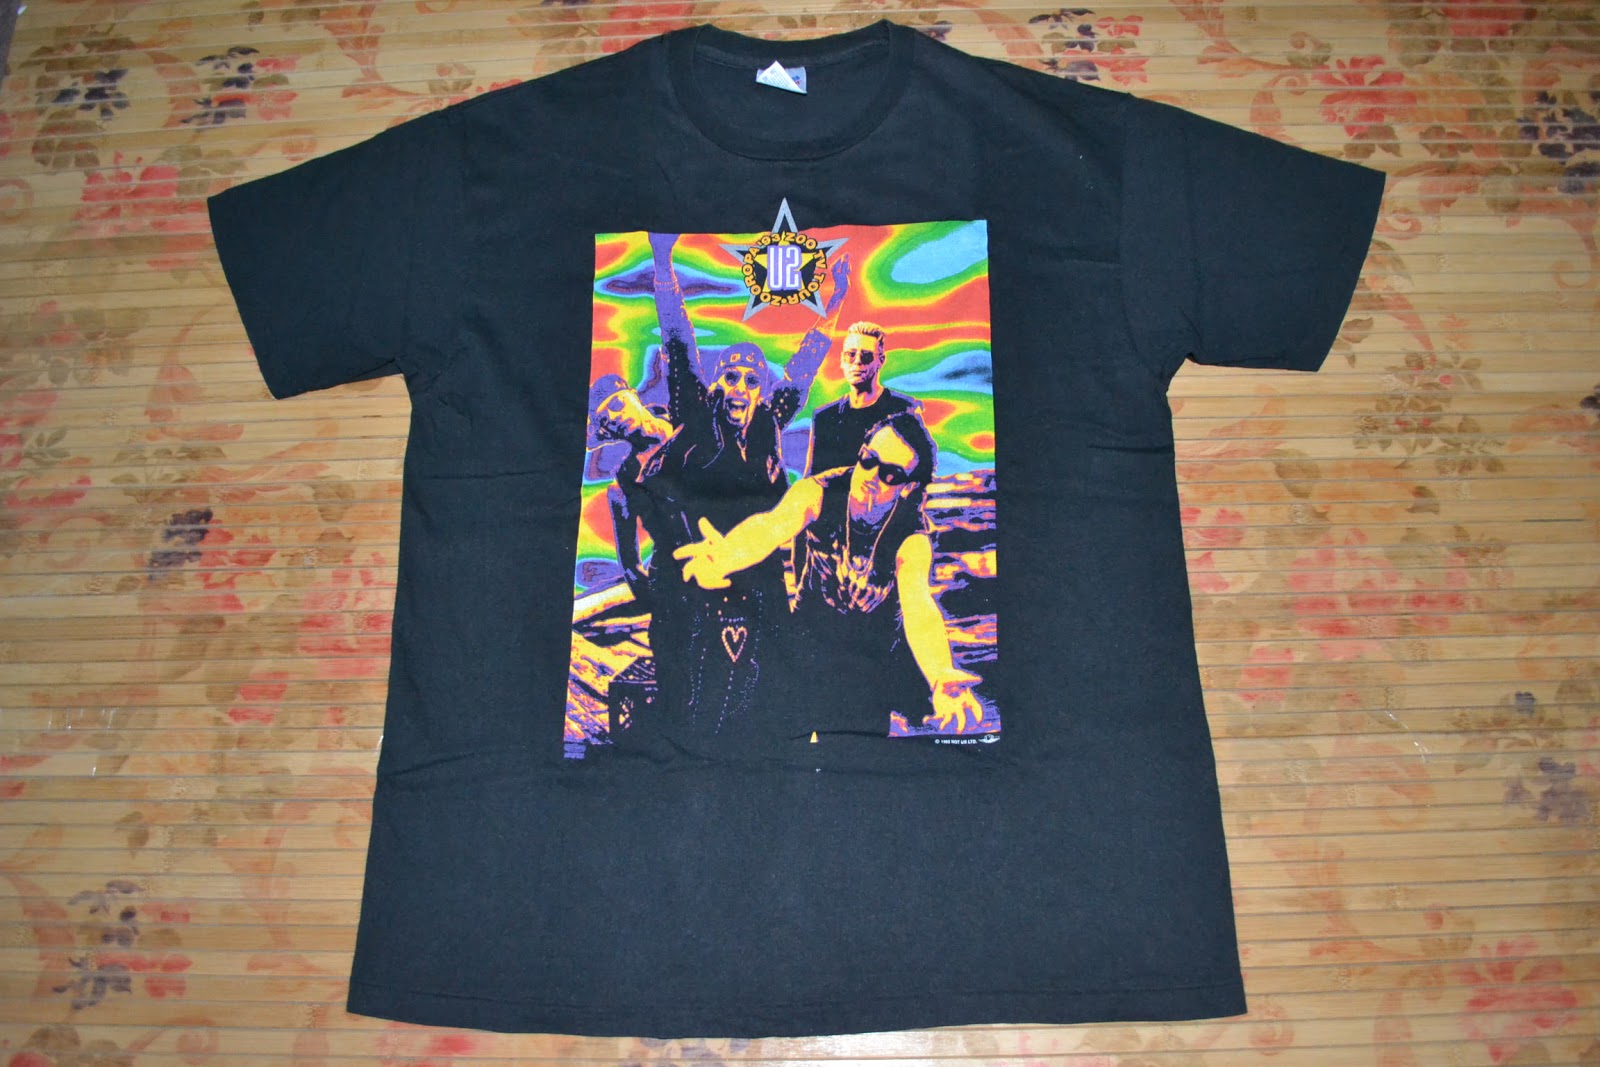 OldSchoolZone: Vintage 1993 U2 band Zooropa Tour T-shirt